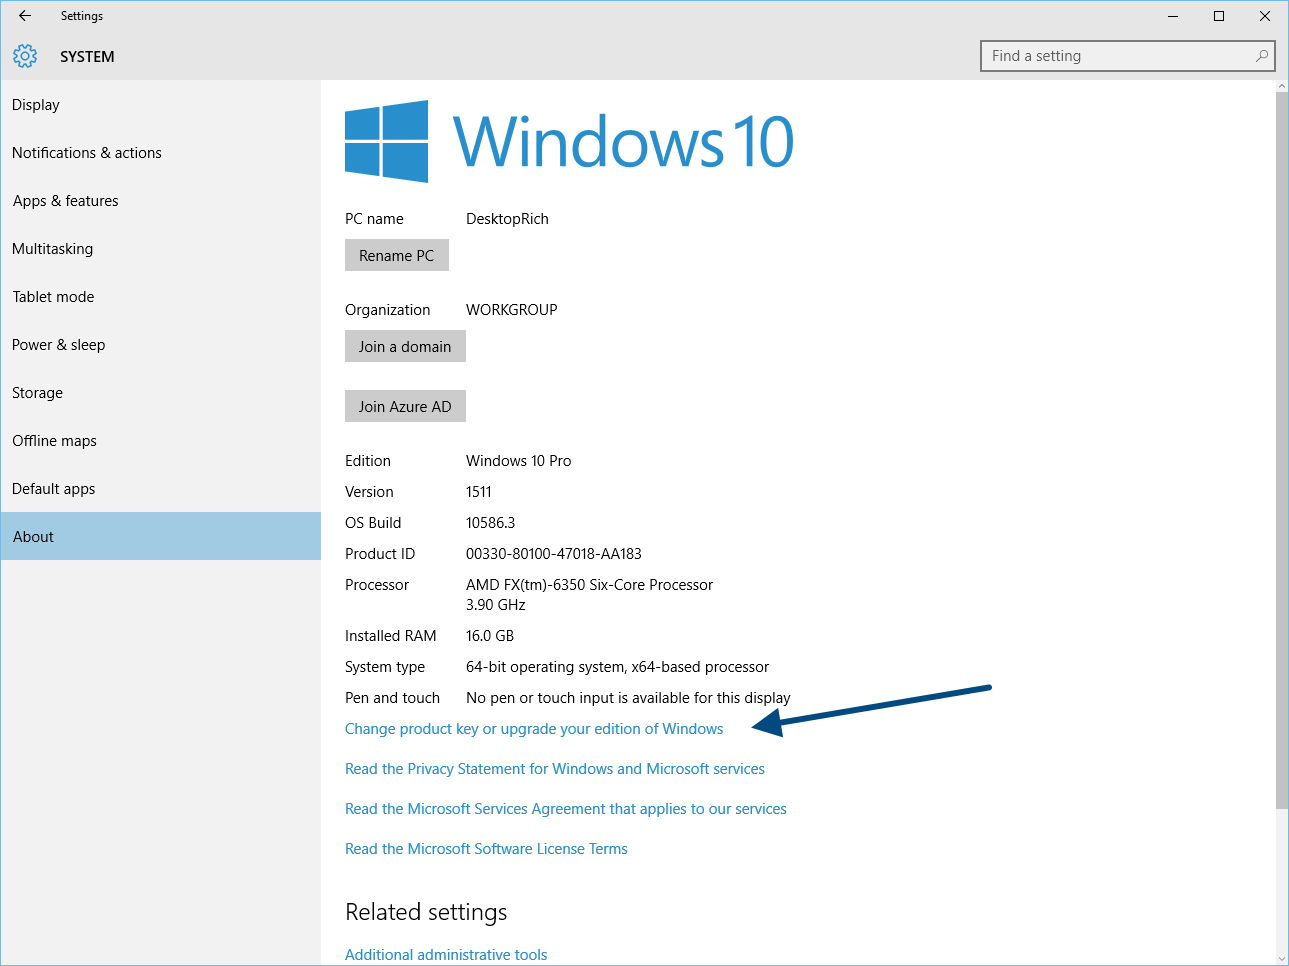 activate windows 10 pro with windows 7 key